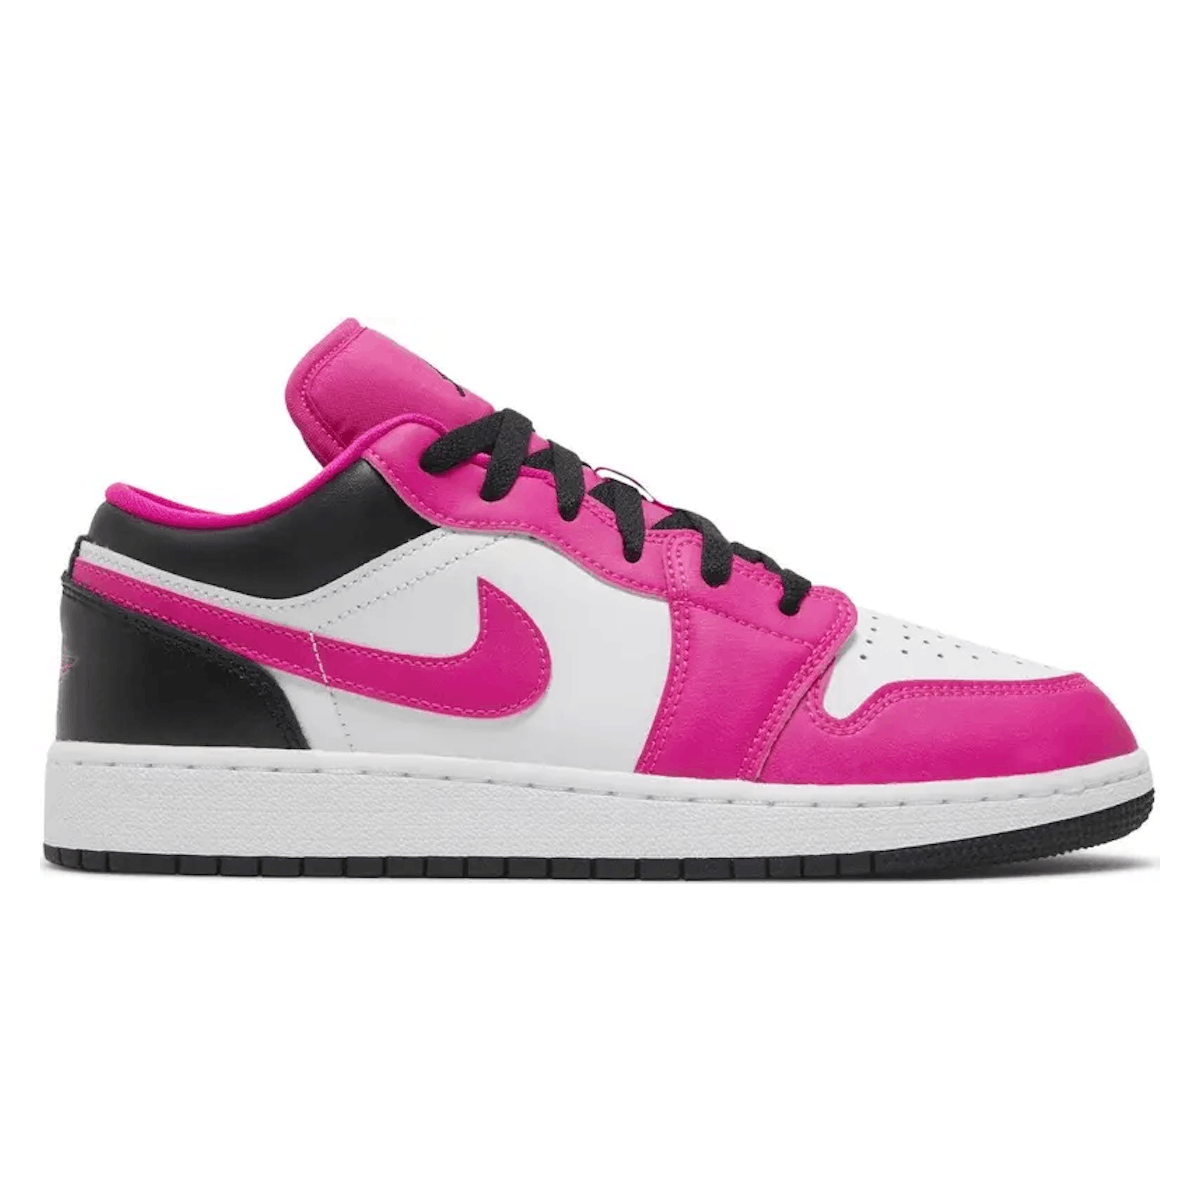 Air Jordan 1 Low GS "Fierce Pink"